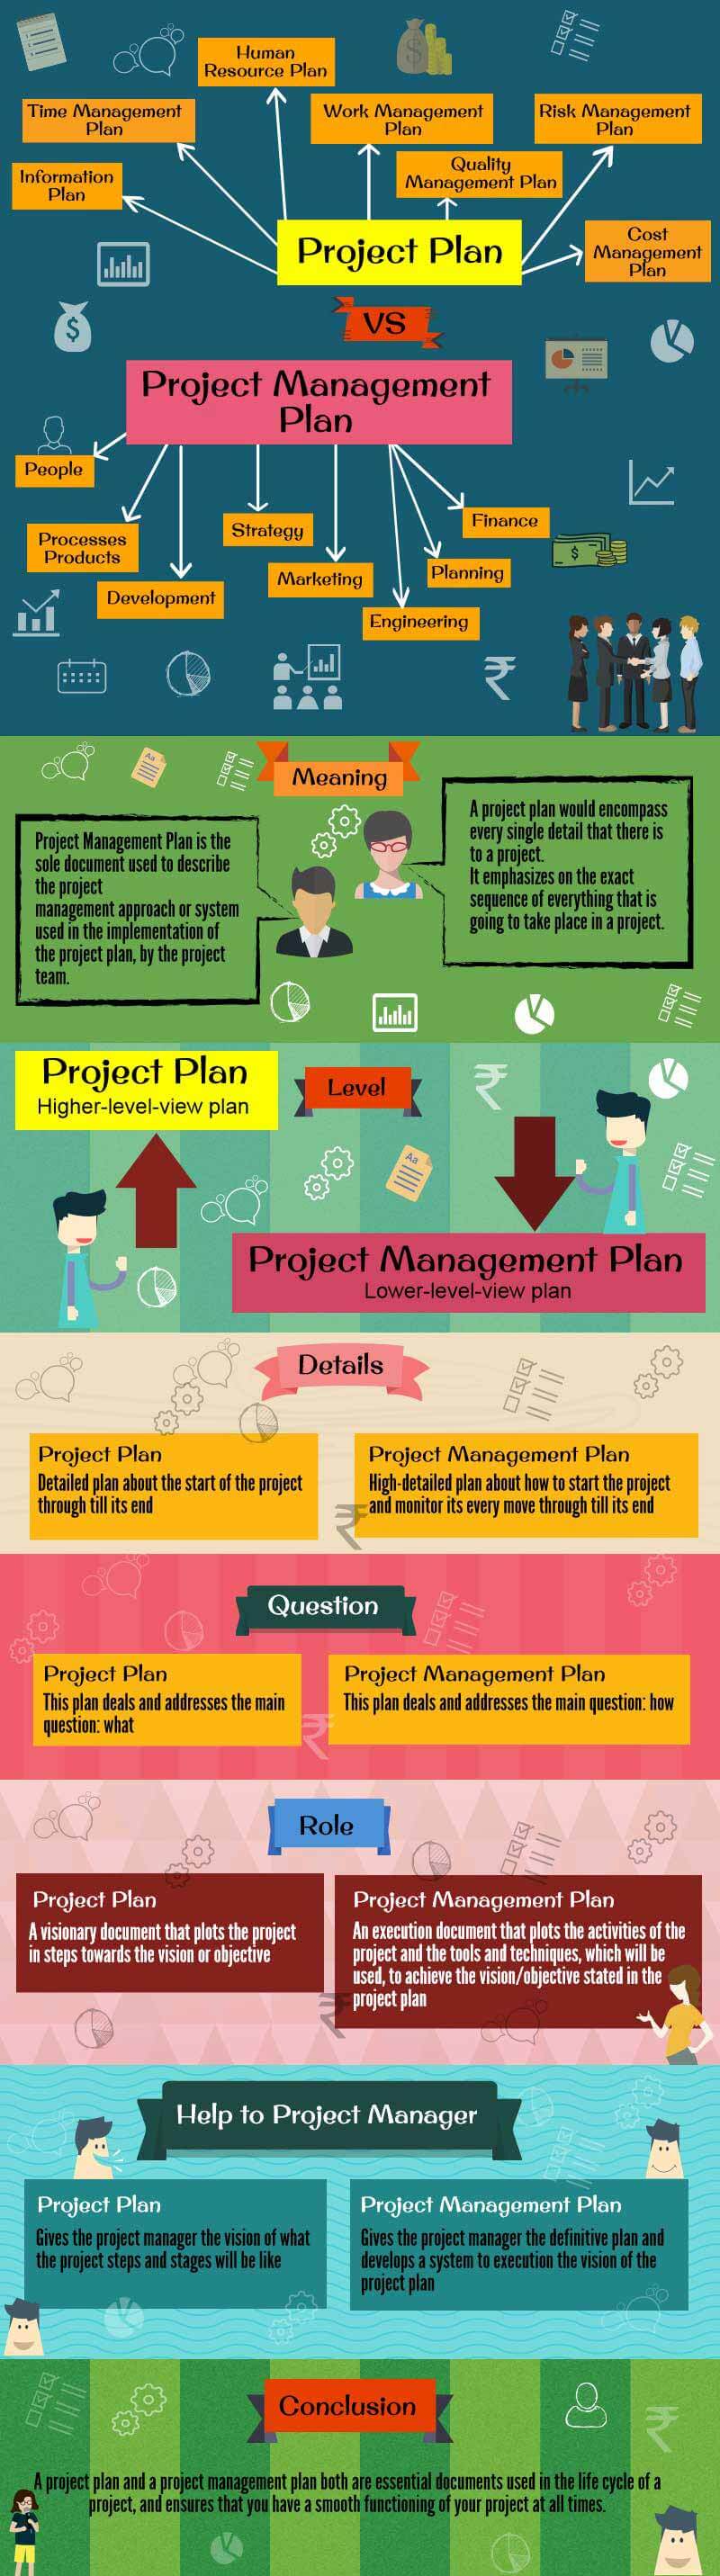 Project Plan vs Project Management Plan info